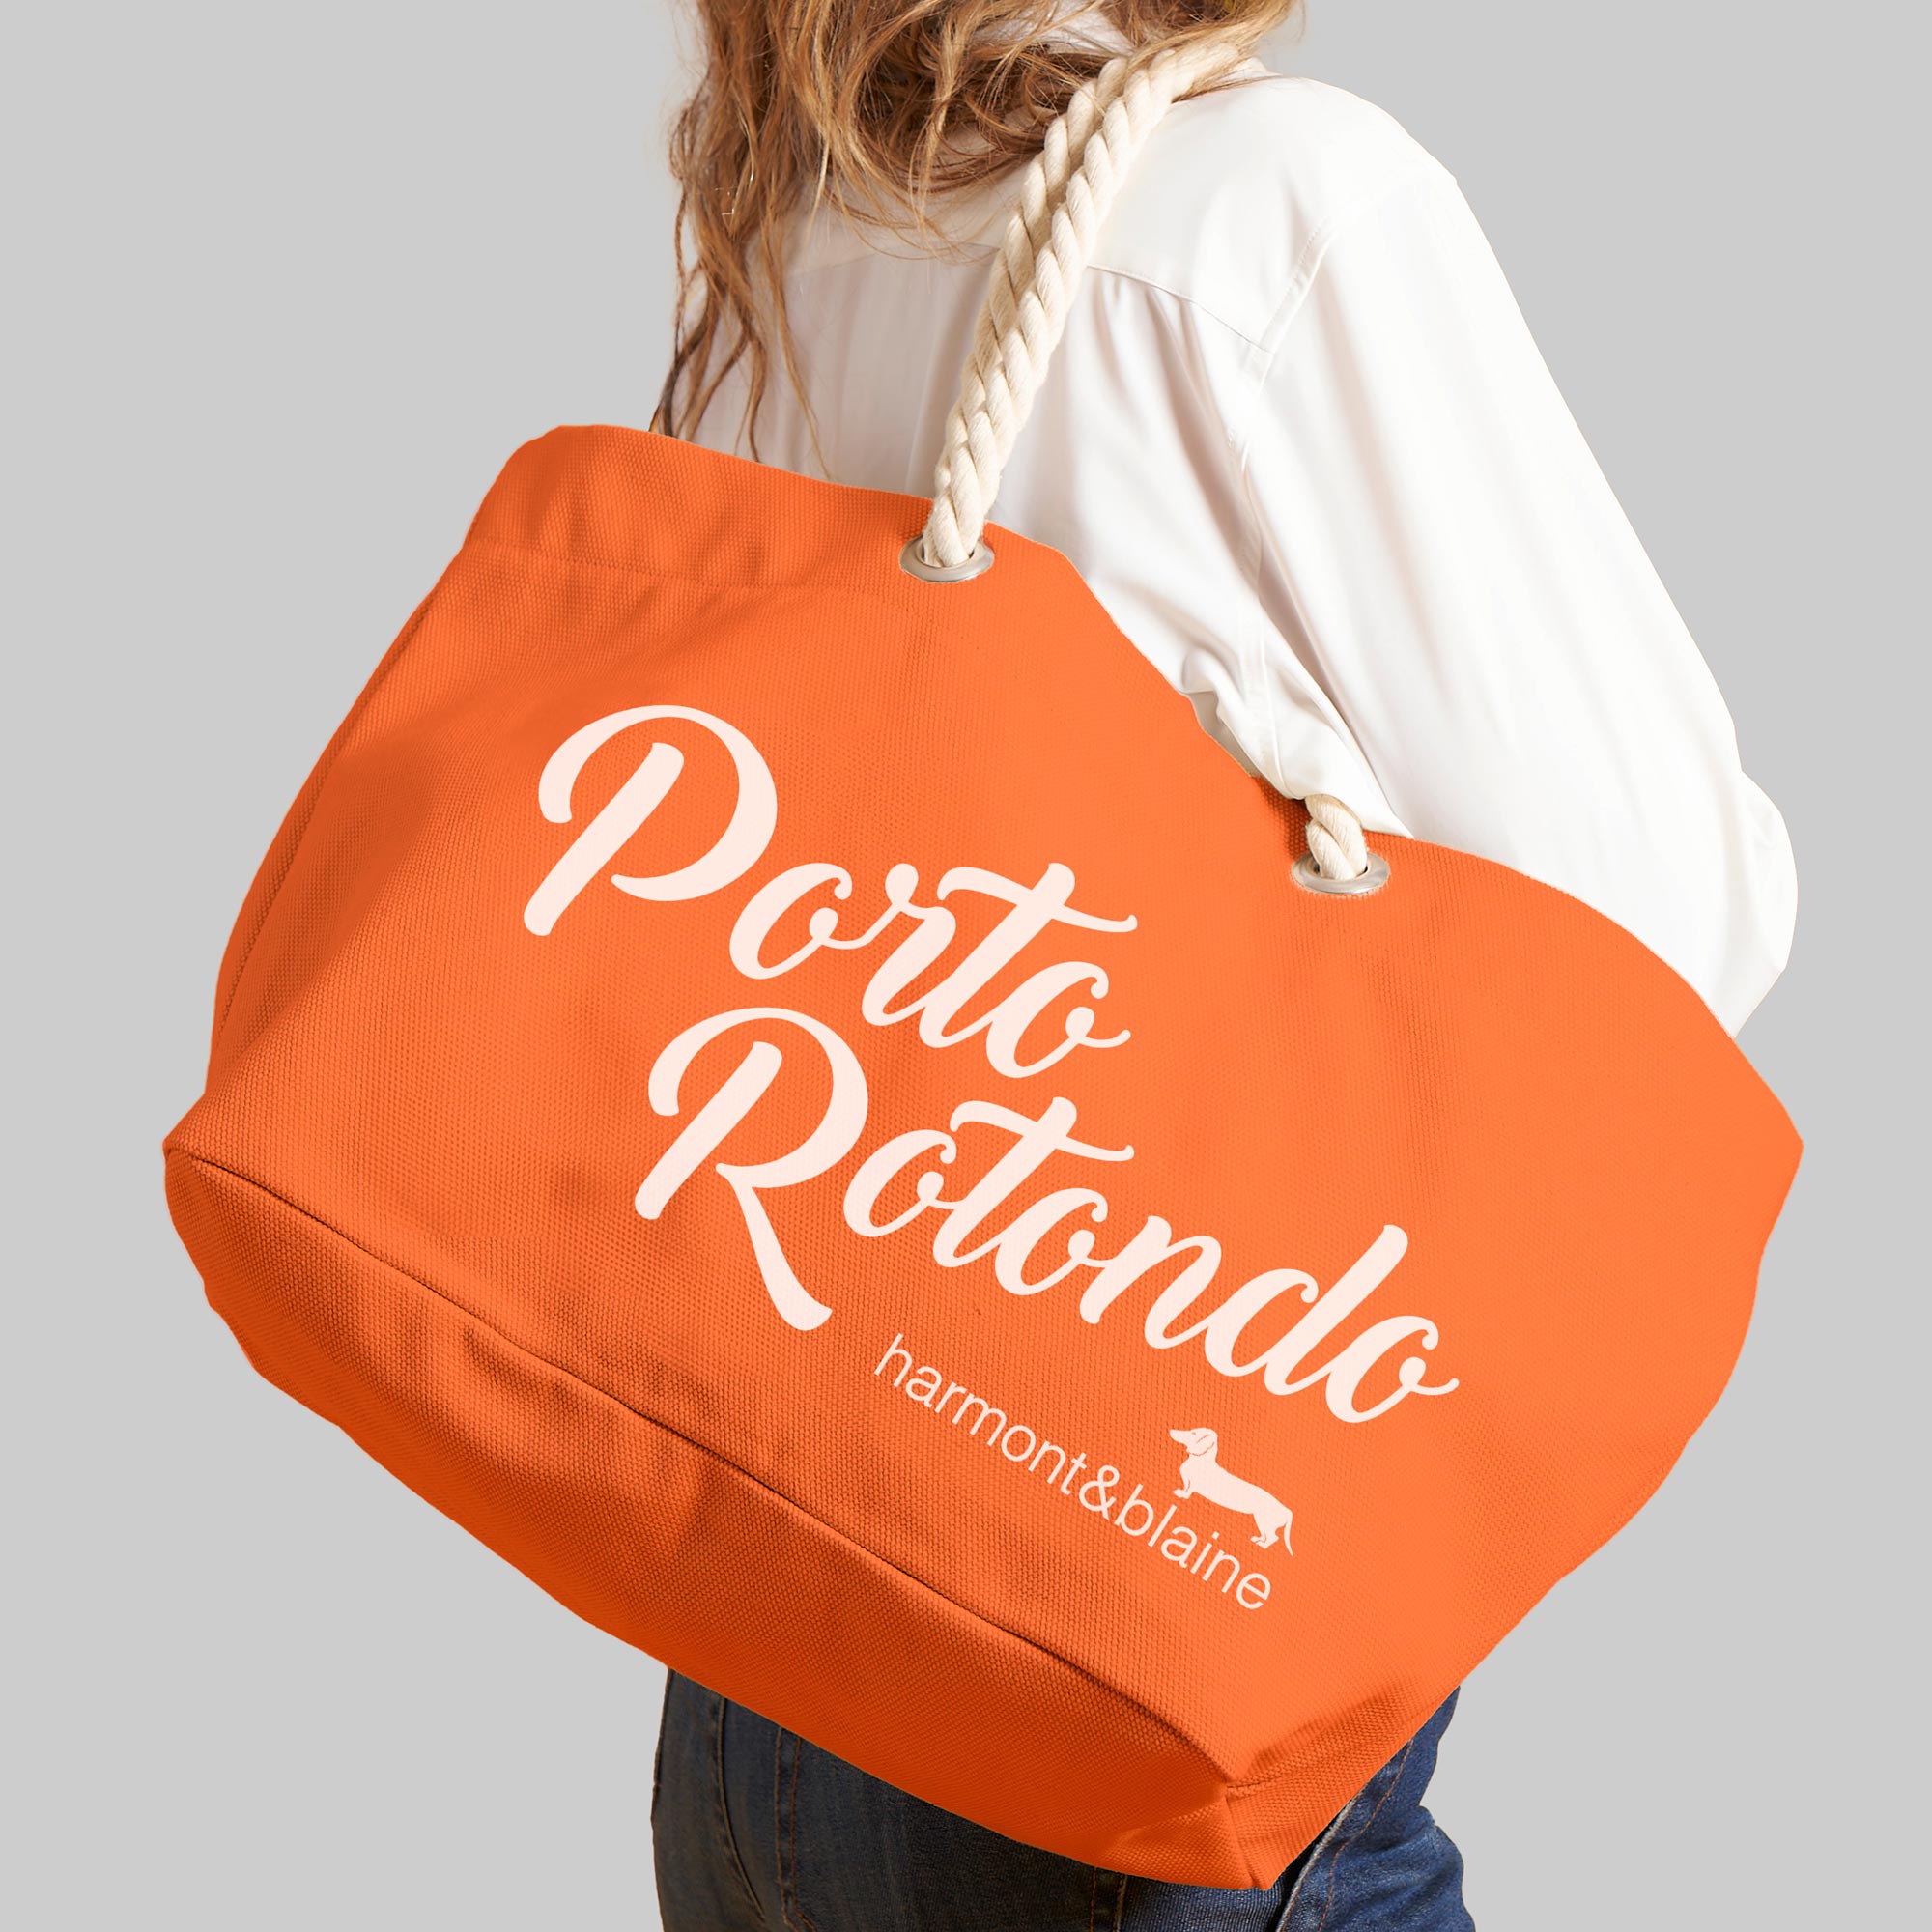 Shopping Bag Porto Rotondo